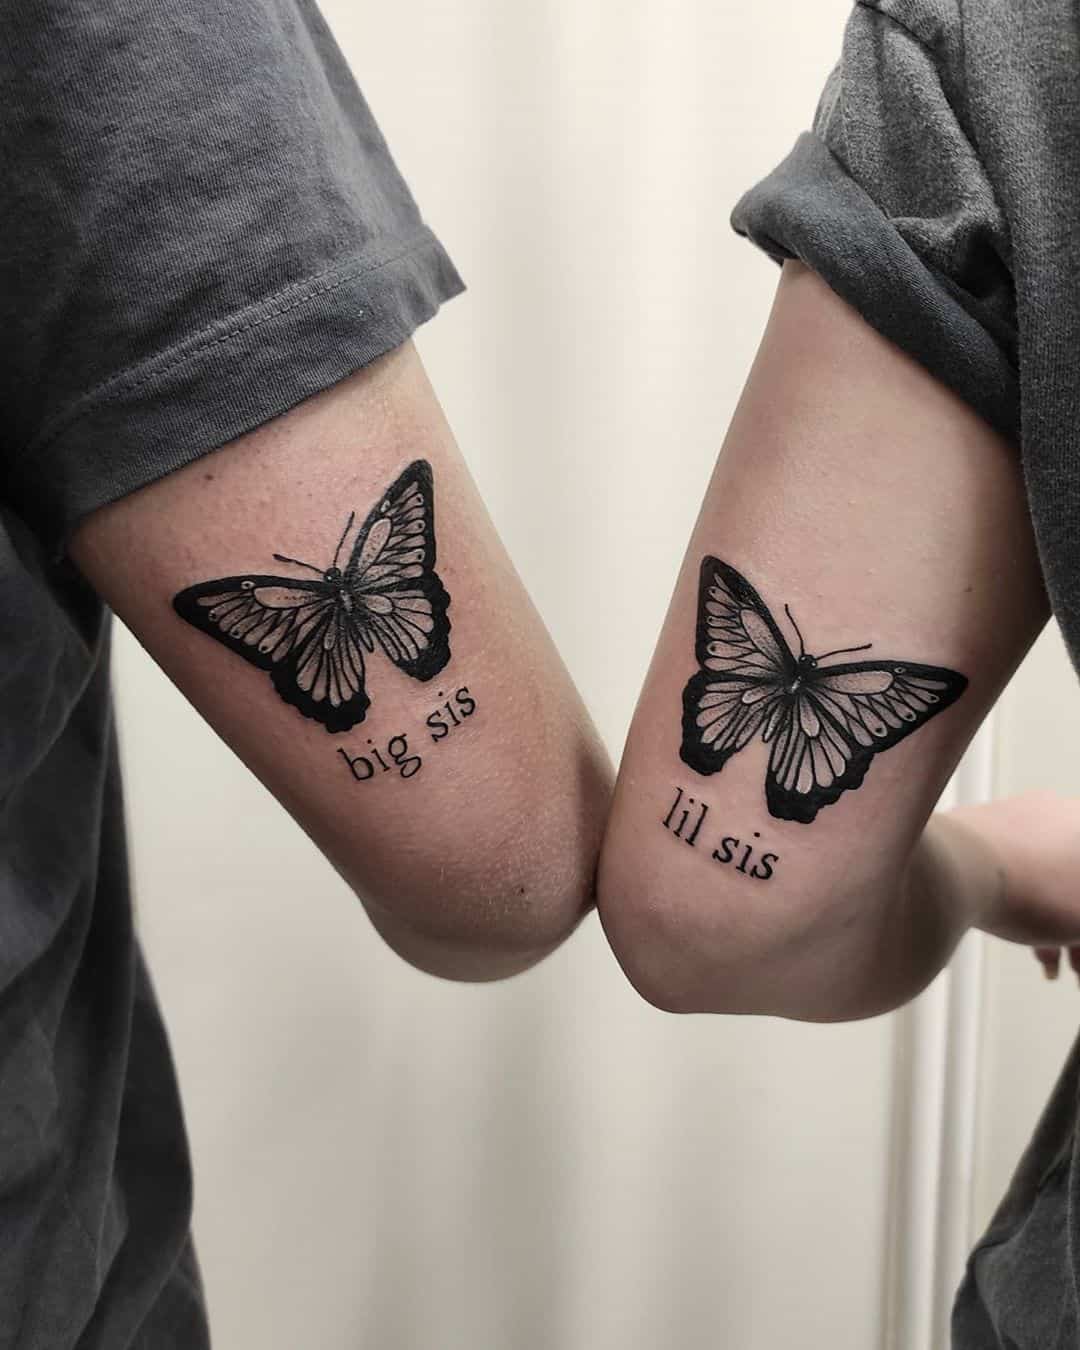 50 Inspirational Butterfly Tattoo Ideas - Beauty Mag